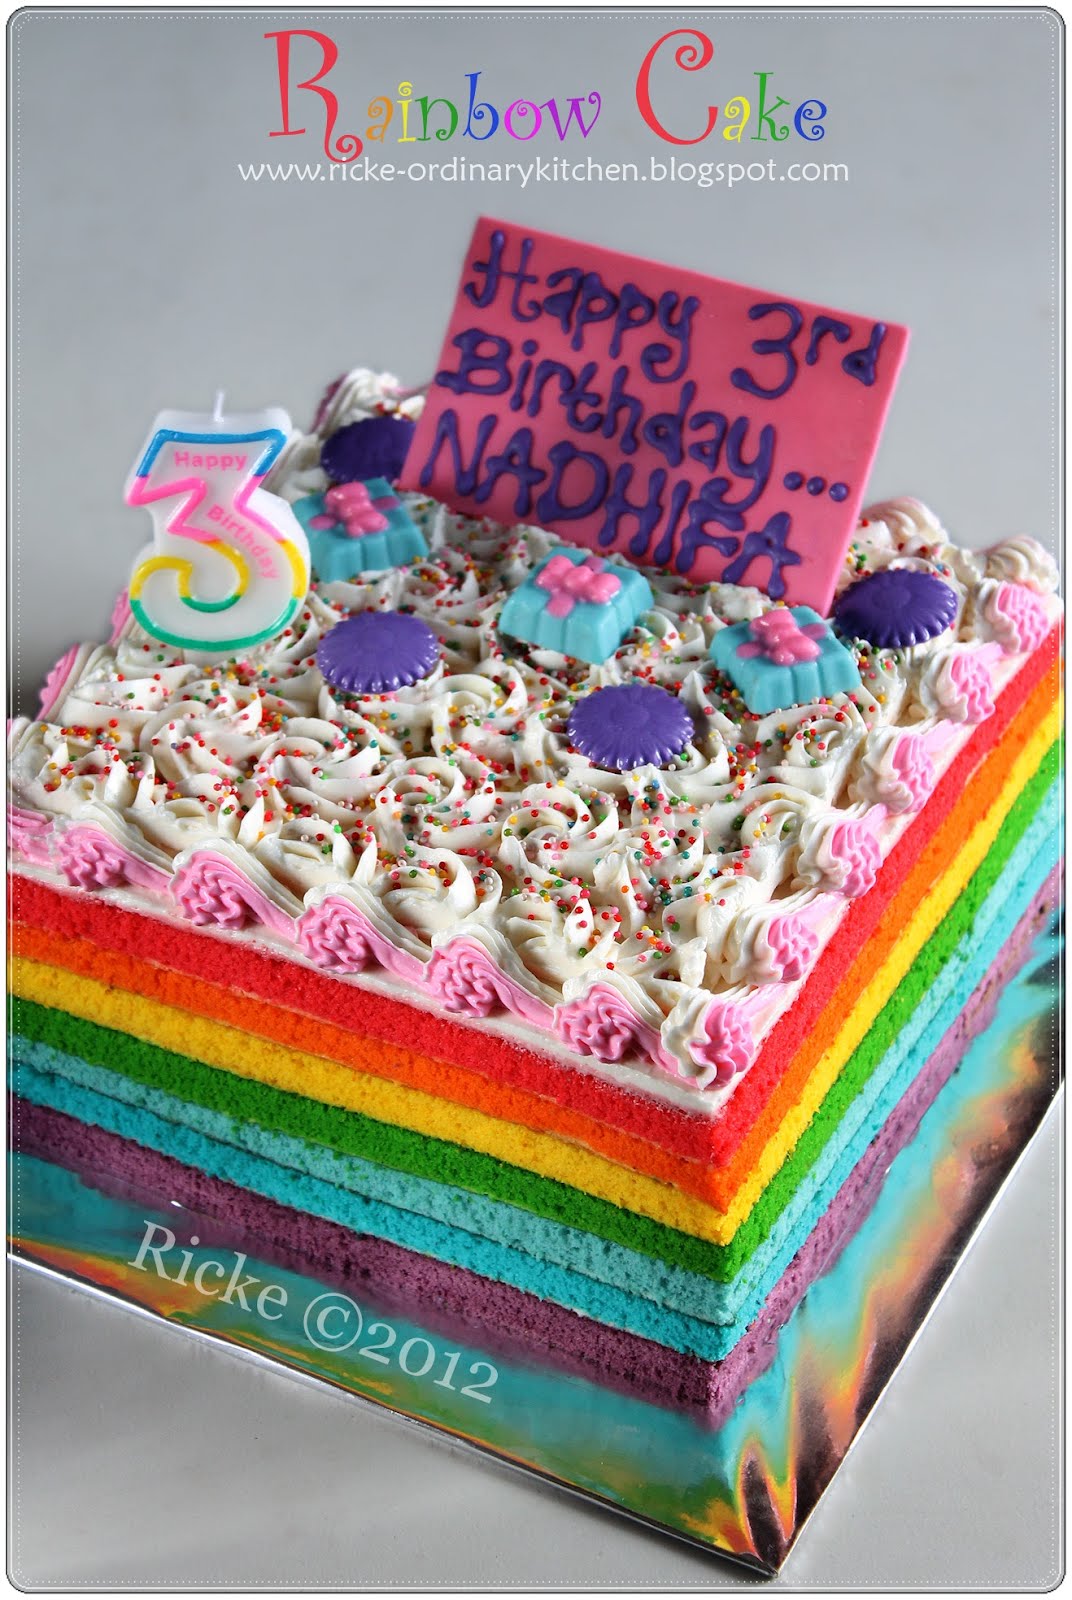 Just My Ordinary Kitchen: RAINBOW CAKE ON NADHIFA'S 3rd 